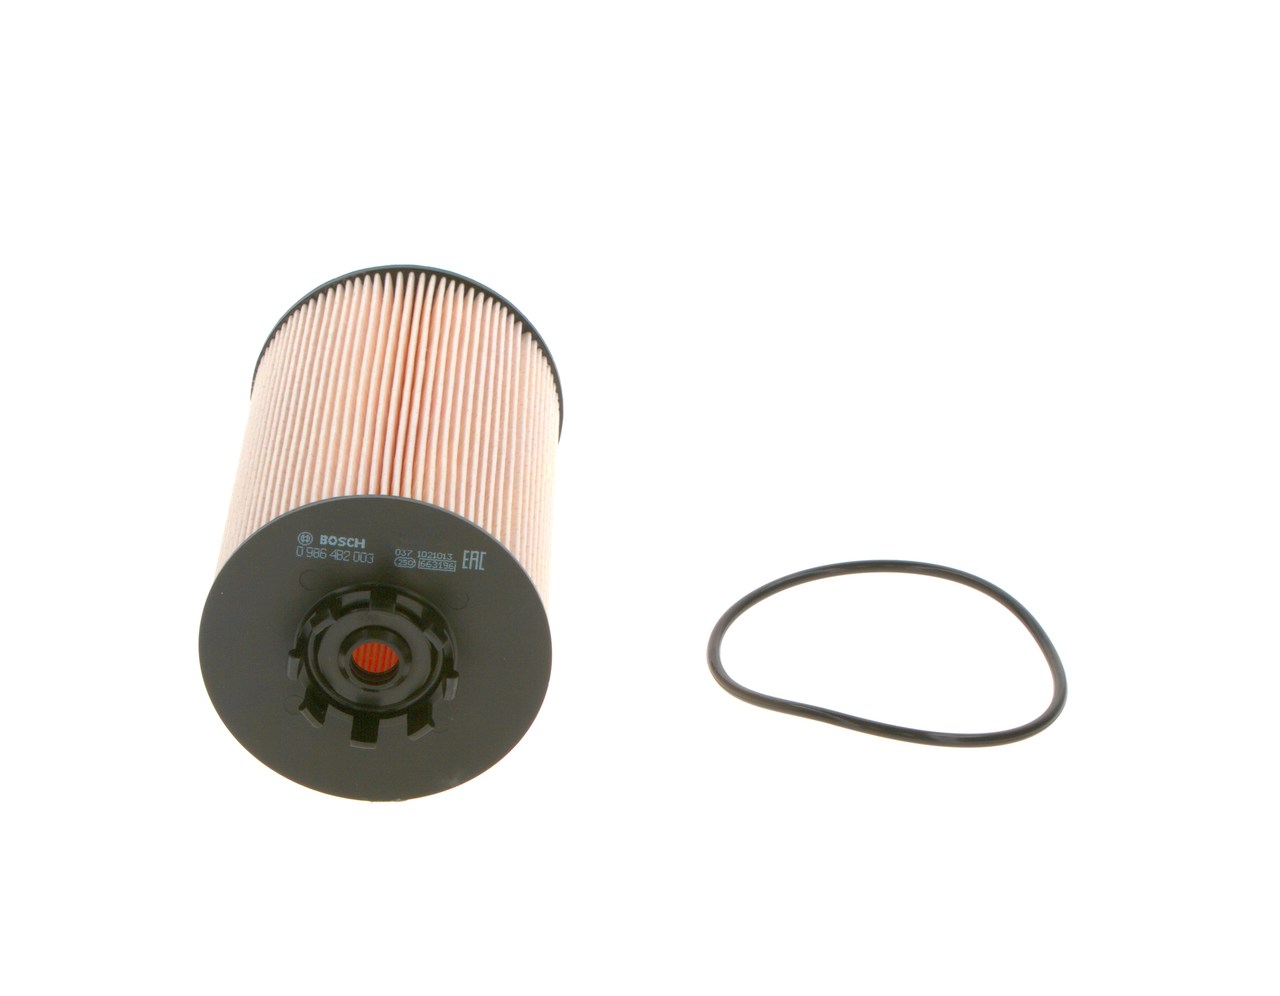 NM 003 BOSCH Filter Insert Height: 173mm Inline fuel filter 0 986 4B2 003 buy